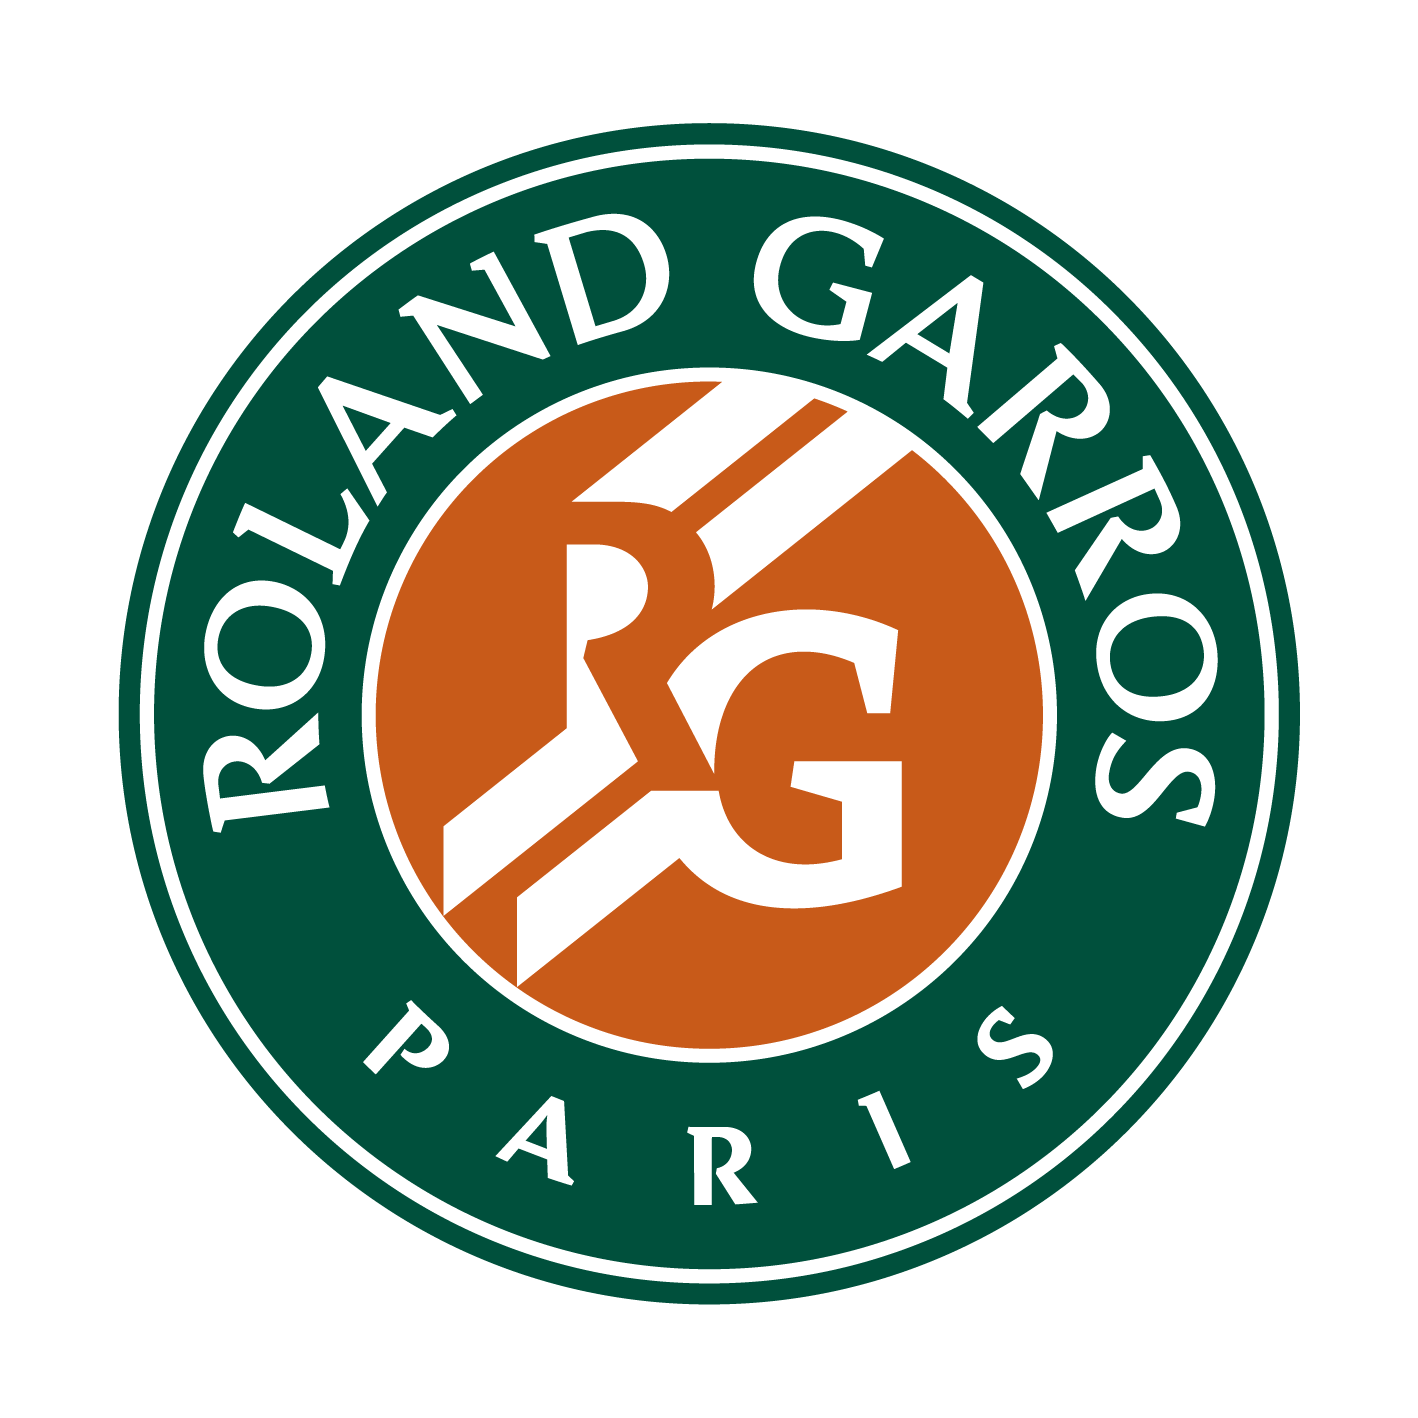 Roland-Garros